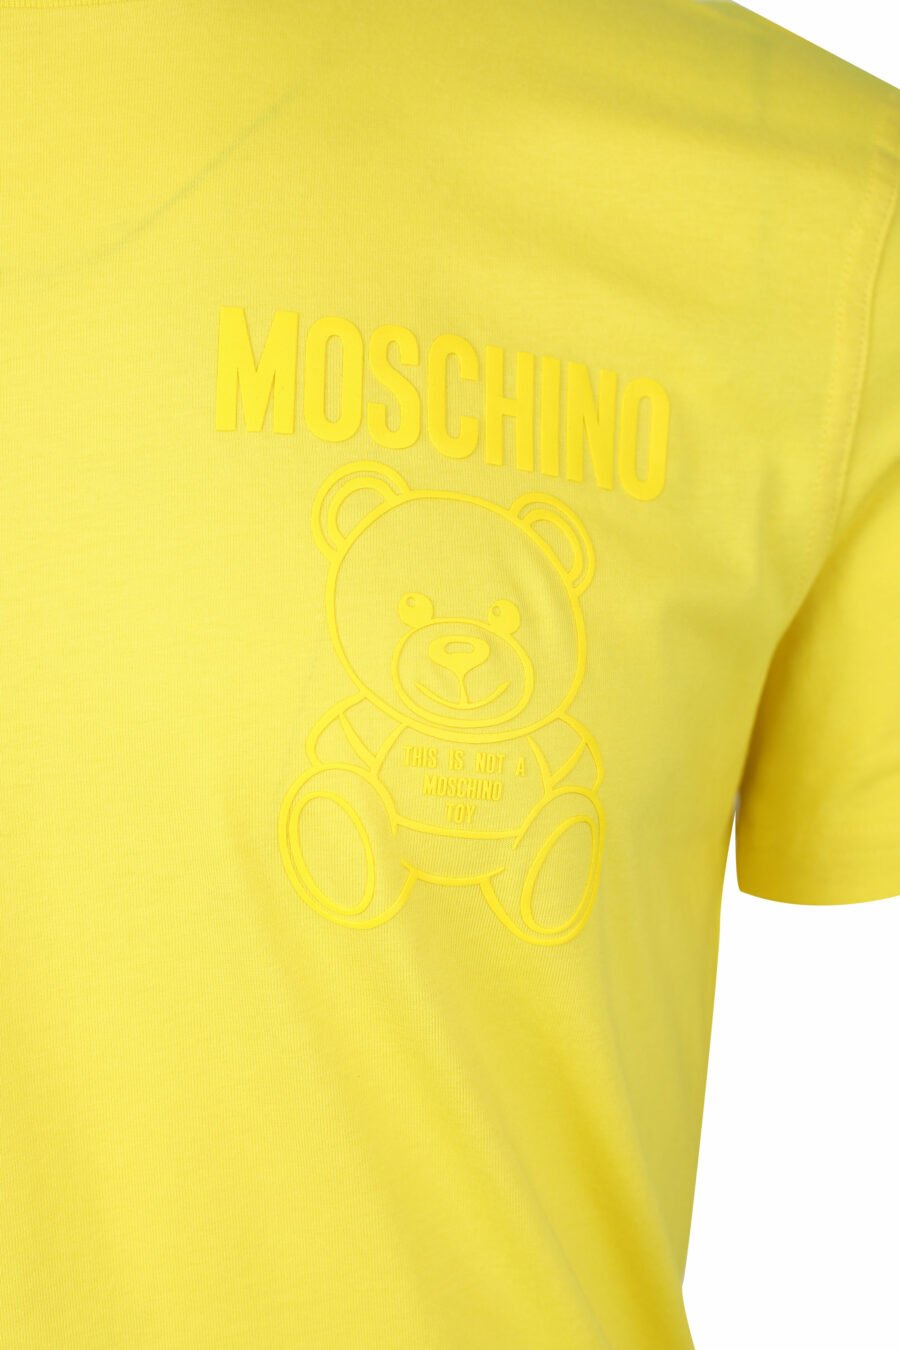 Camiseta amarilla con minilogo oso monocromático - IMG 1413